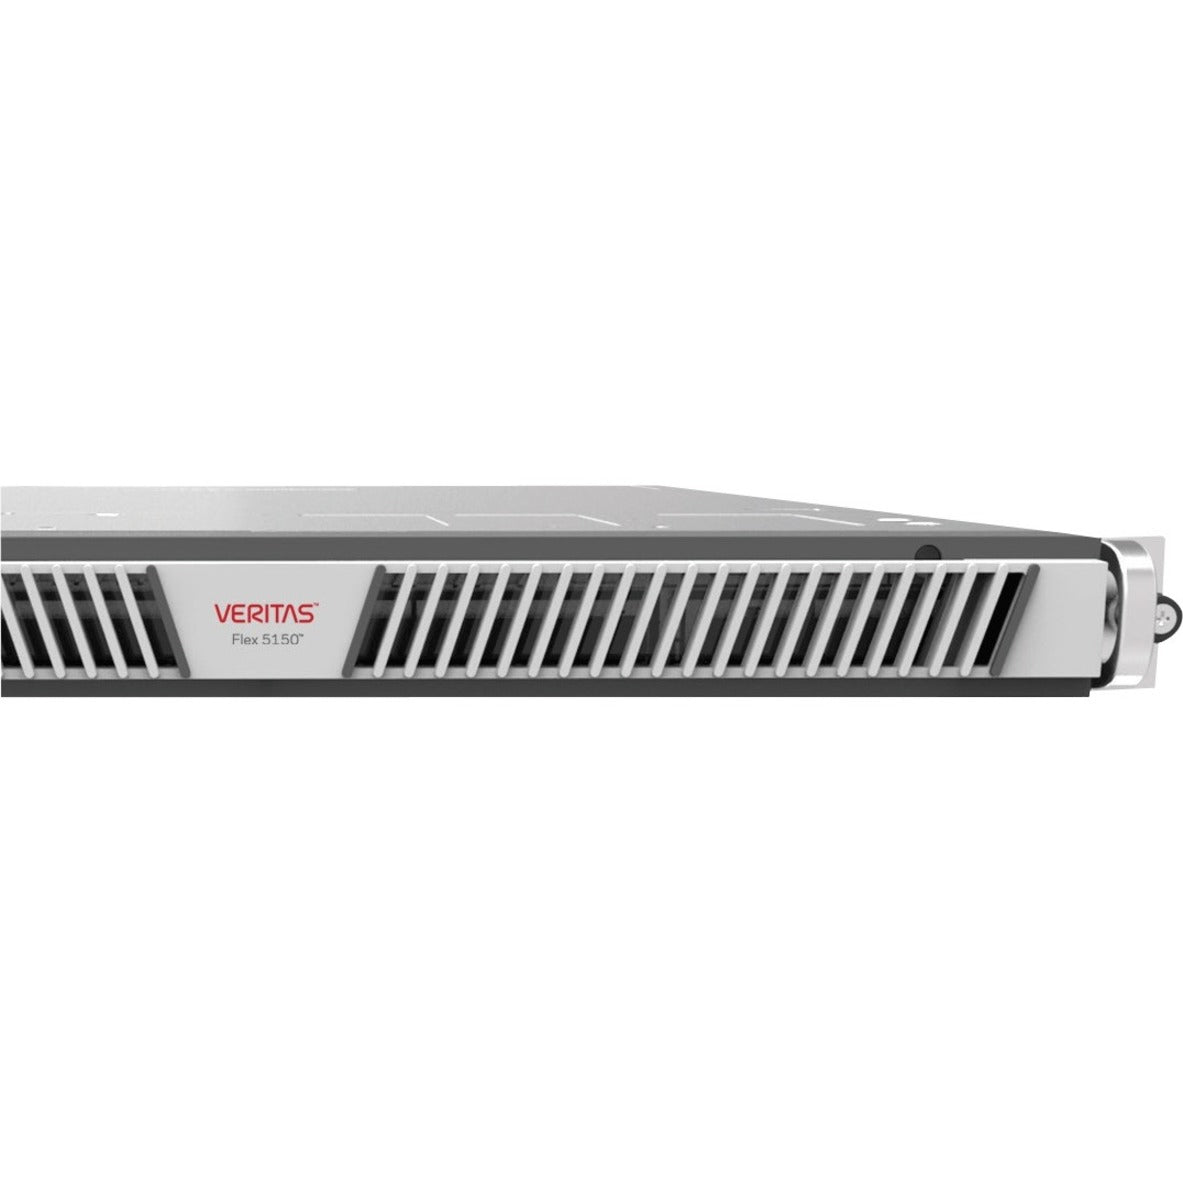 Veritas 26113-M0009 Flex System 5150 NAS Storage System, 15TB Total Hard Drive Capacity Installed, 12Gb/s SAS Controller, 6 Network (RJ-45) Ports